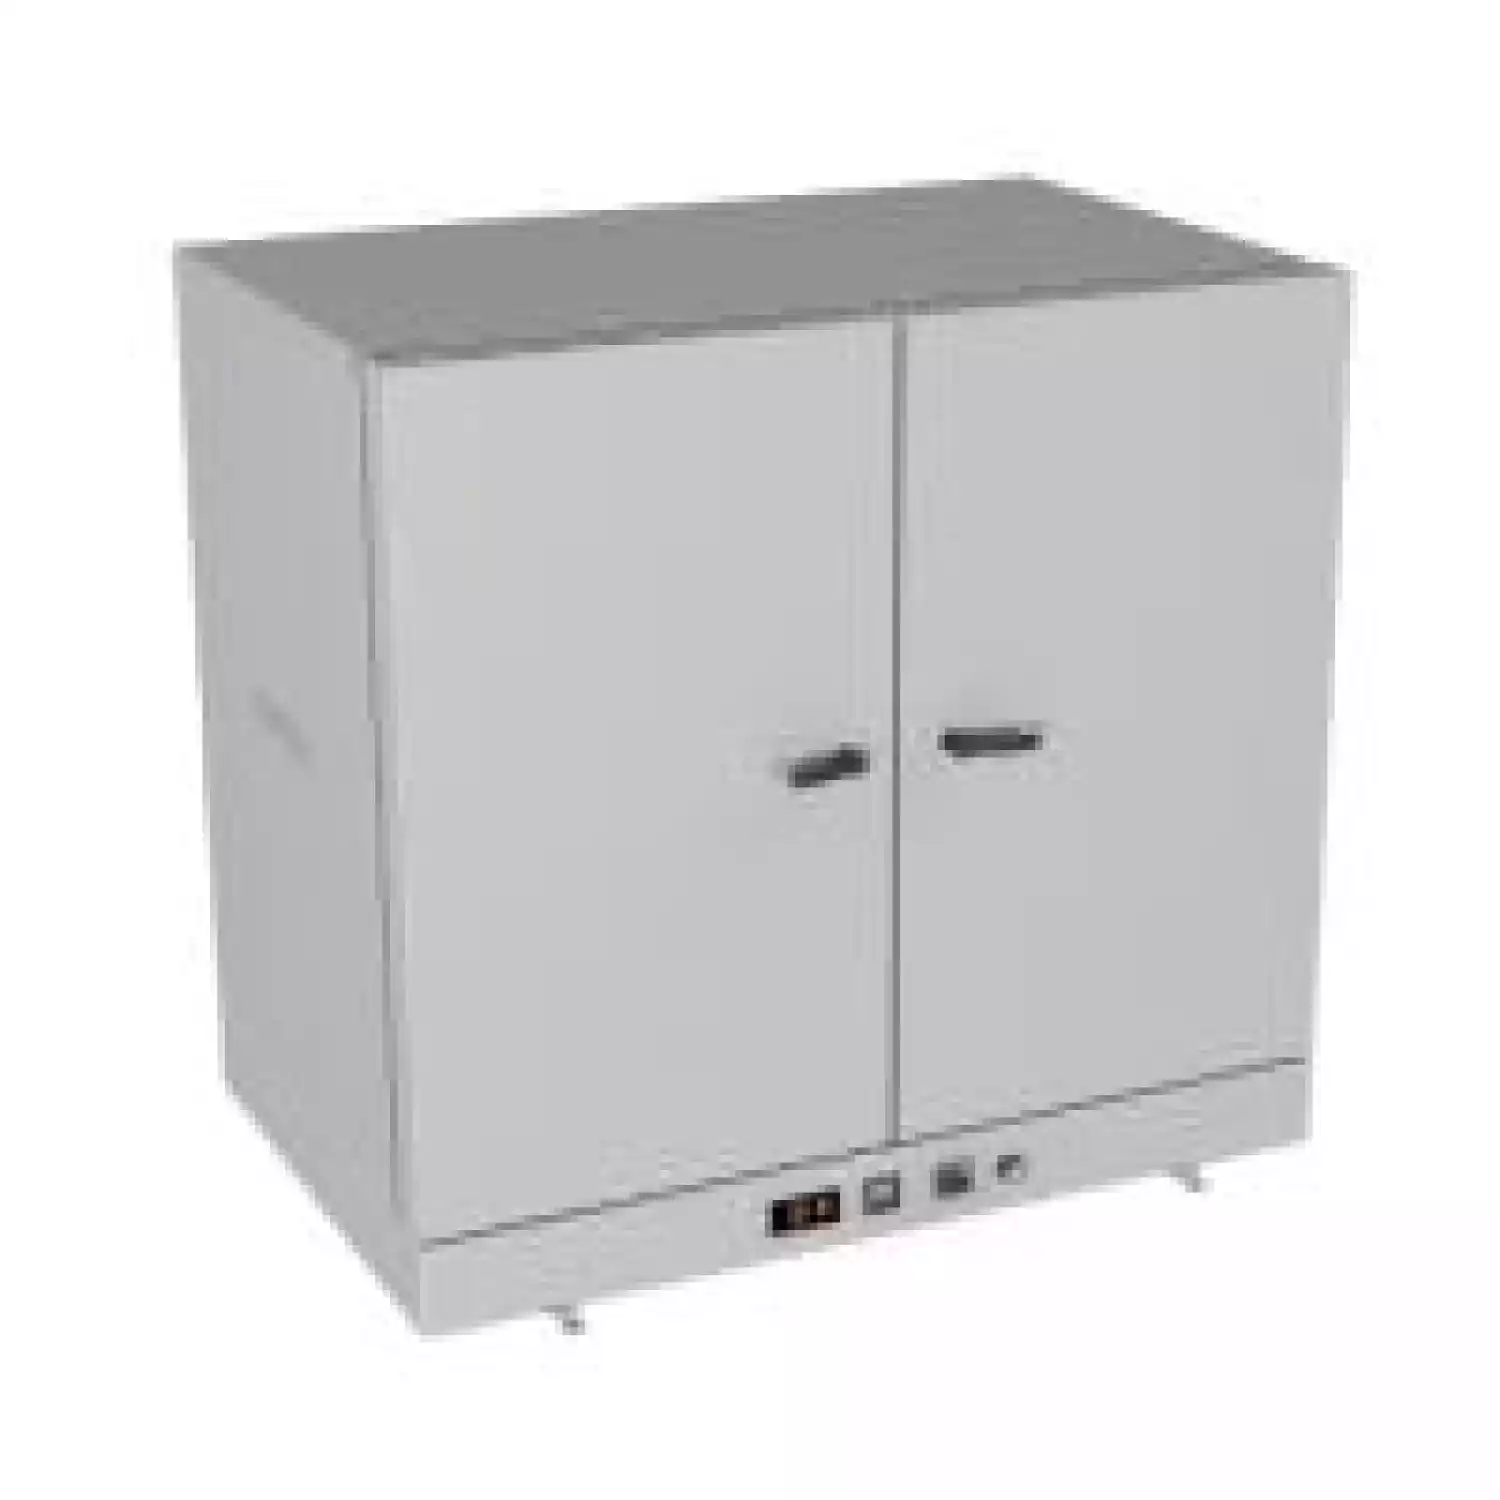 Сушильный шкаф SNOL 420/300 (терморегулятор — интерфейс) - 1